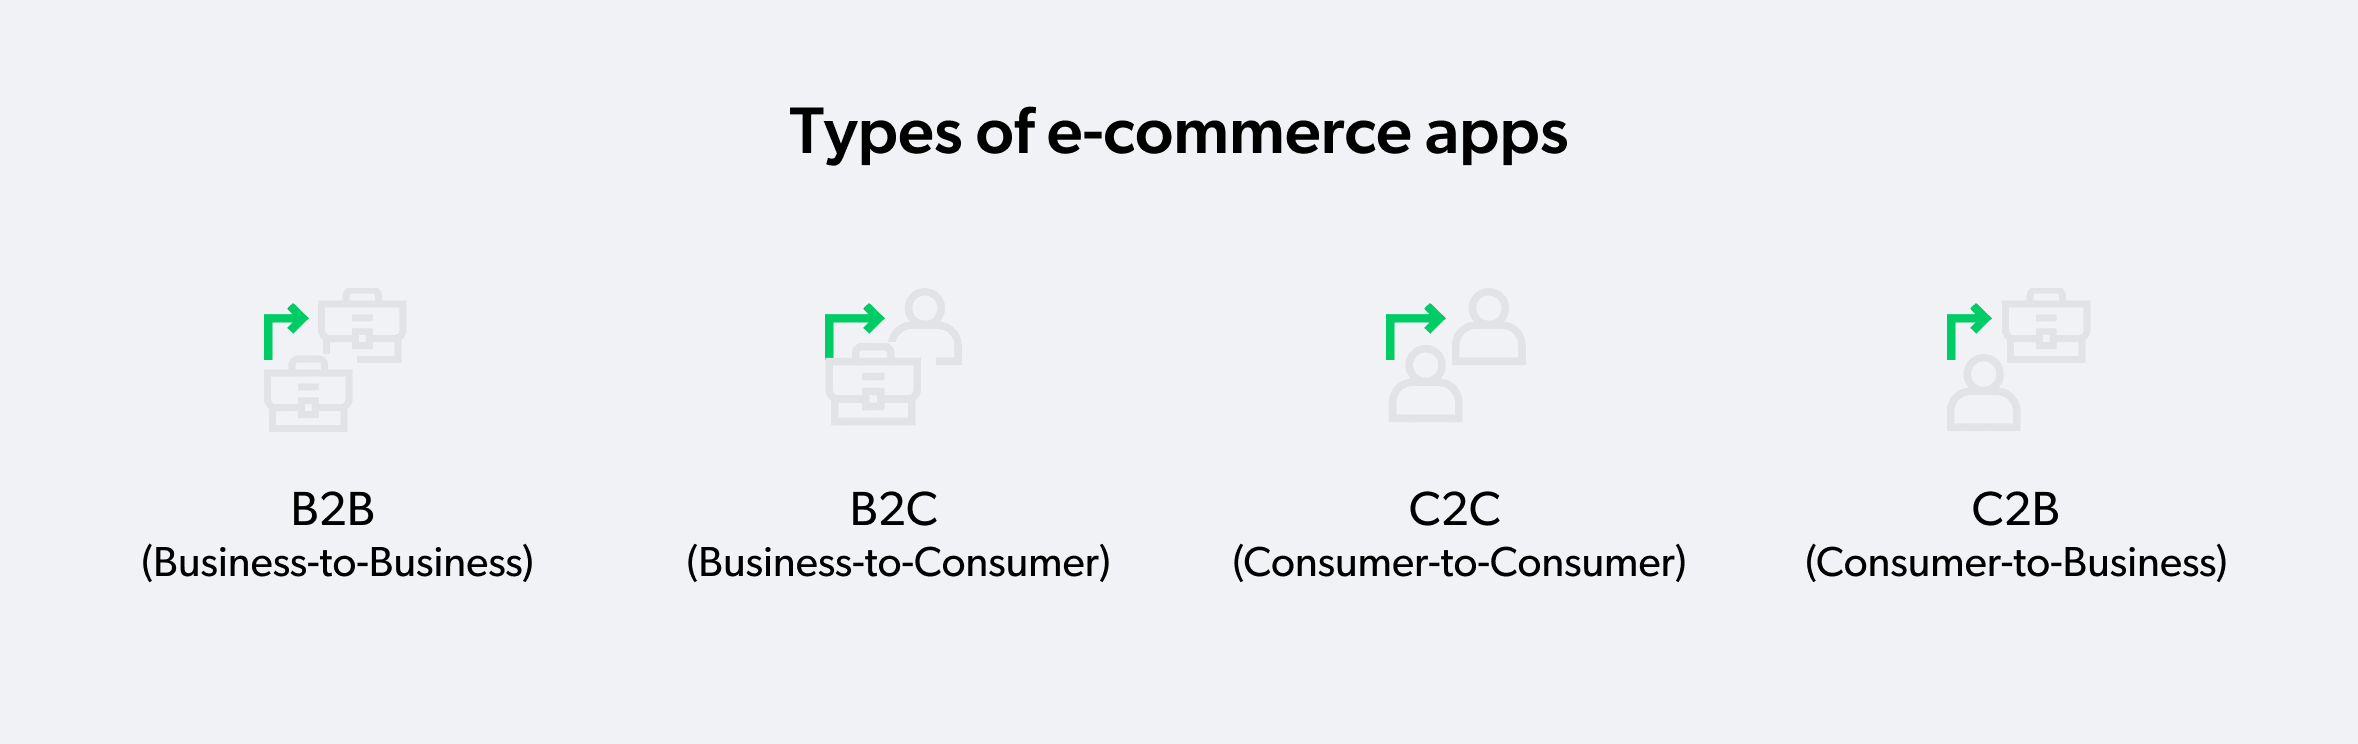 types of e-commerce apps 